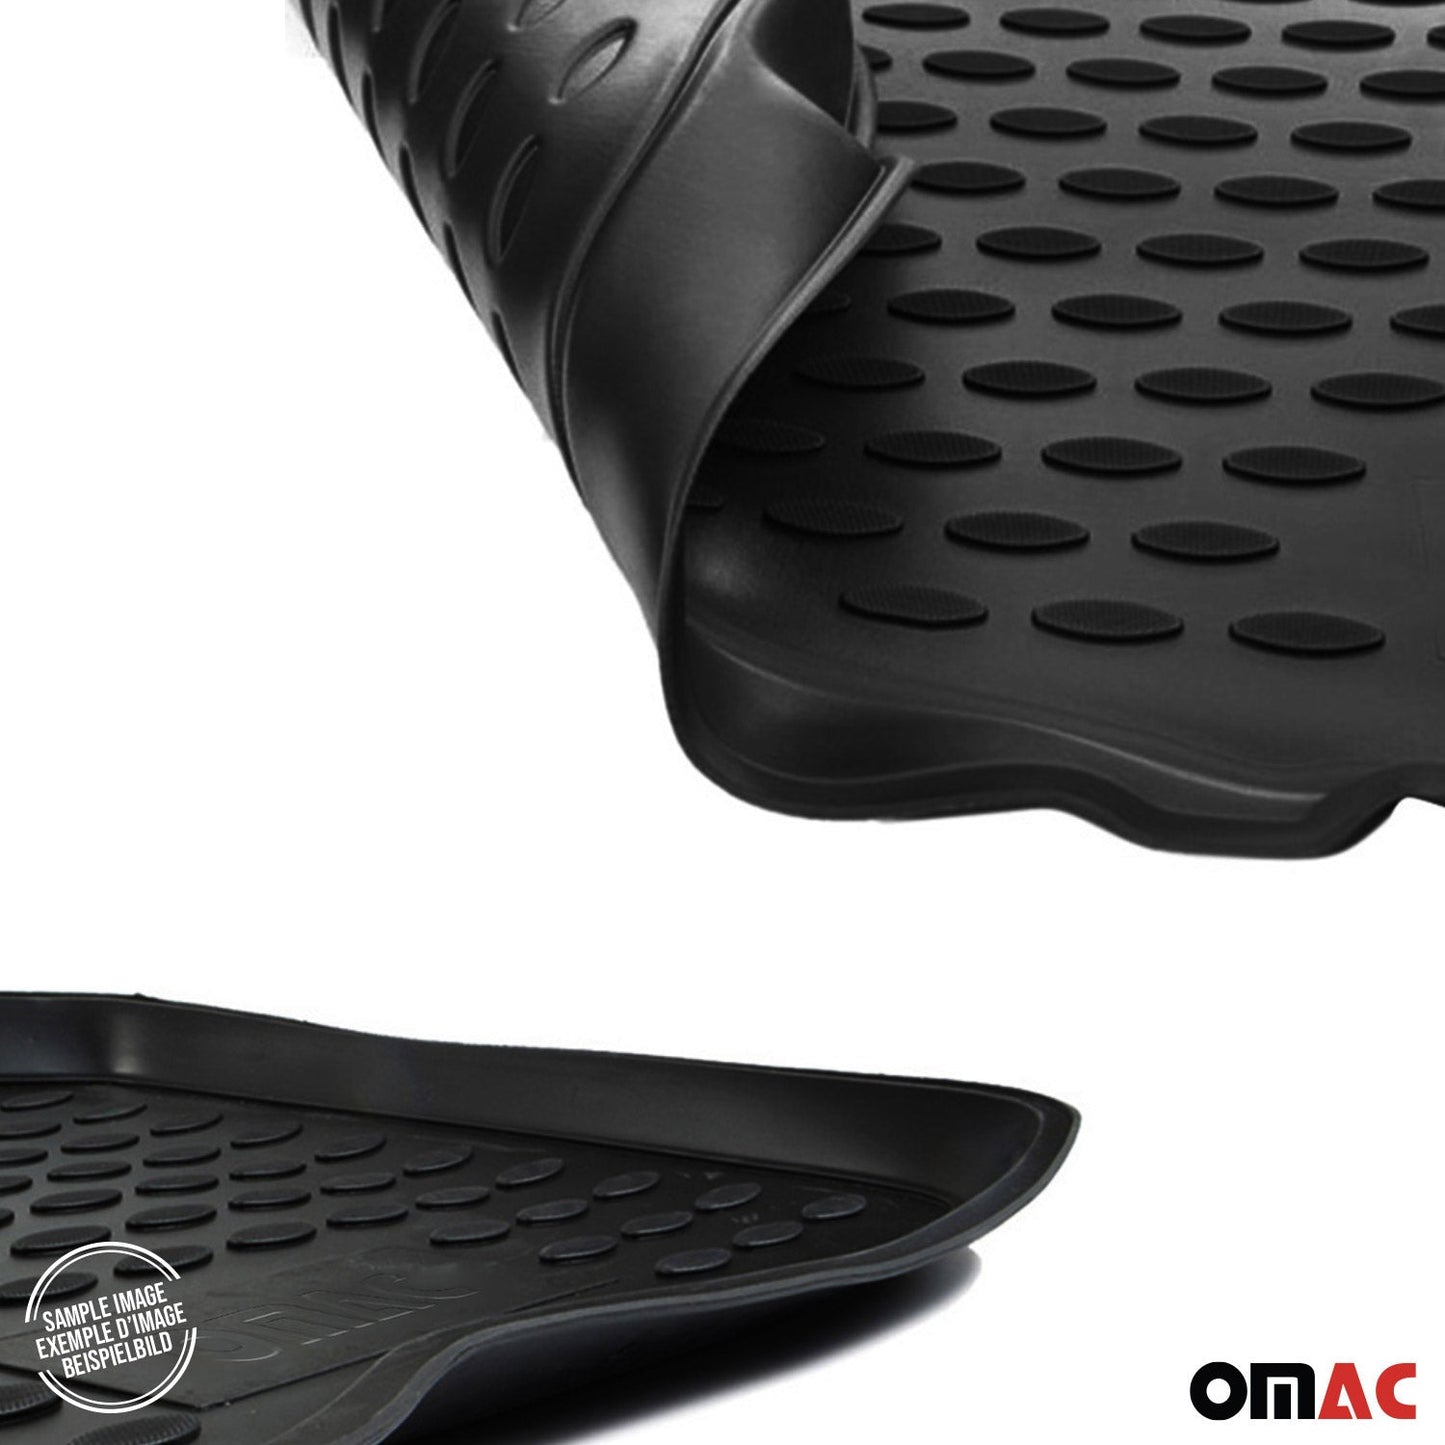 OMAC Floor Mats Liner for Audi Q7 2007-2015 Black TPE All-Weather 4 Pcs 1109444